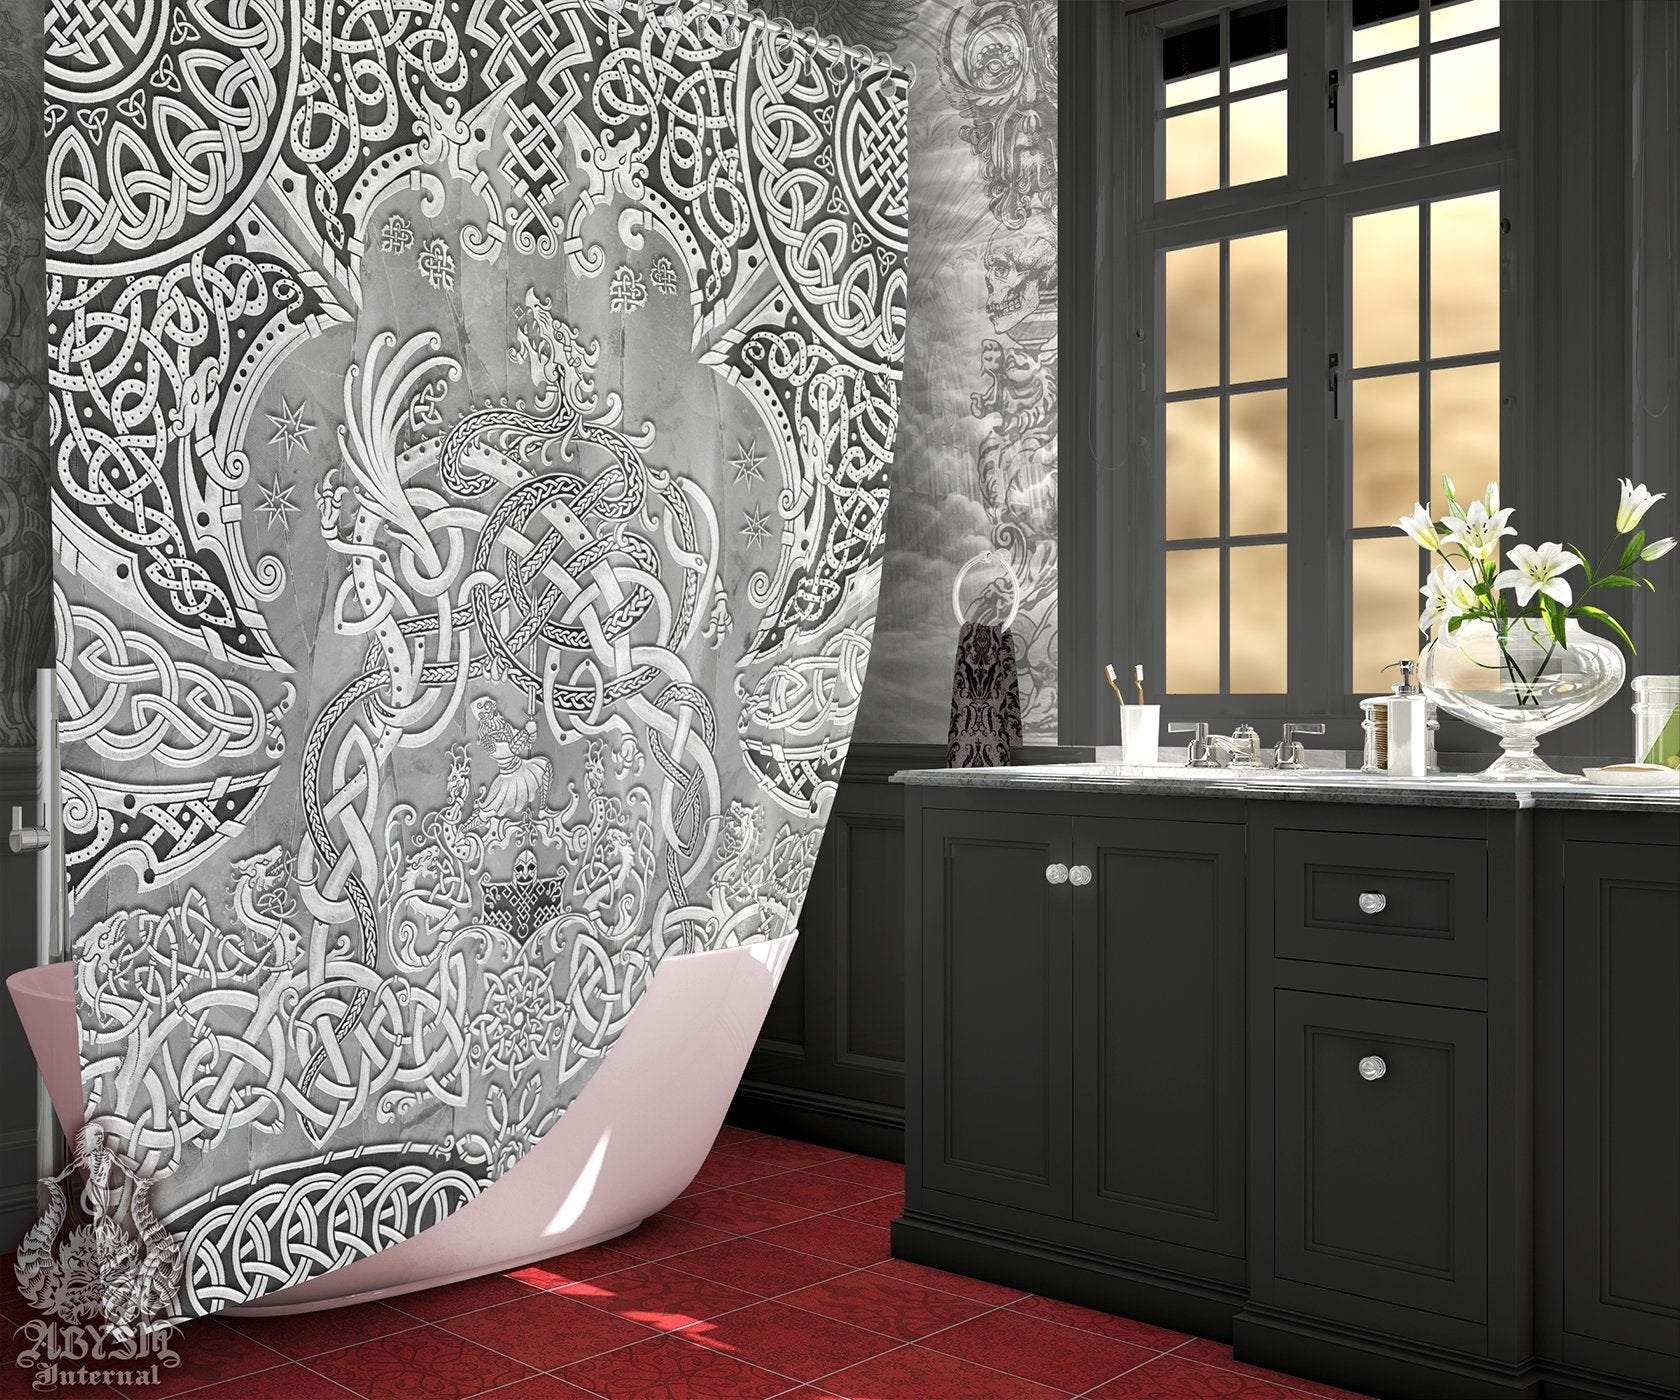 Viking Shower Curtain, Bathroom Decor, Nordic & Norse Art, Dragon Fafnir - Stone - Abysm Internal